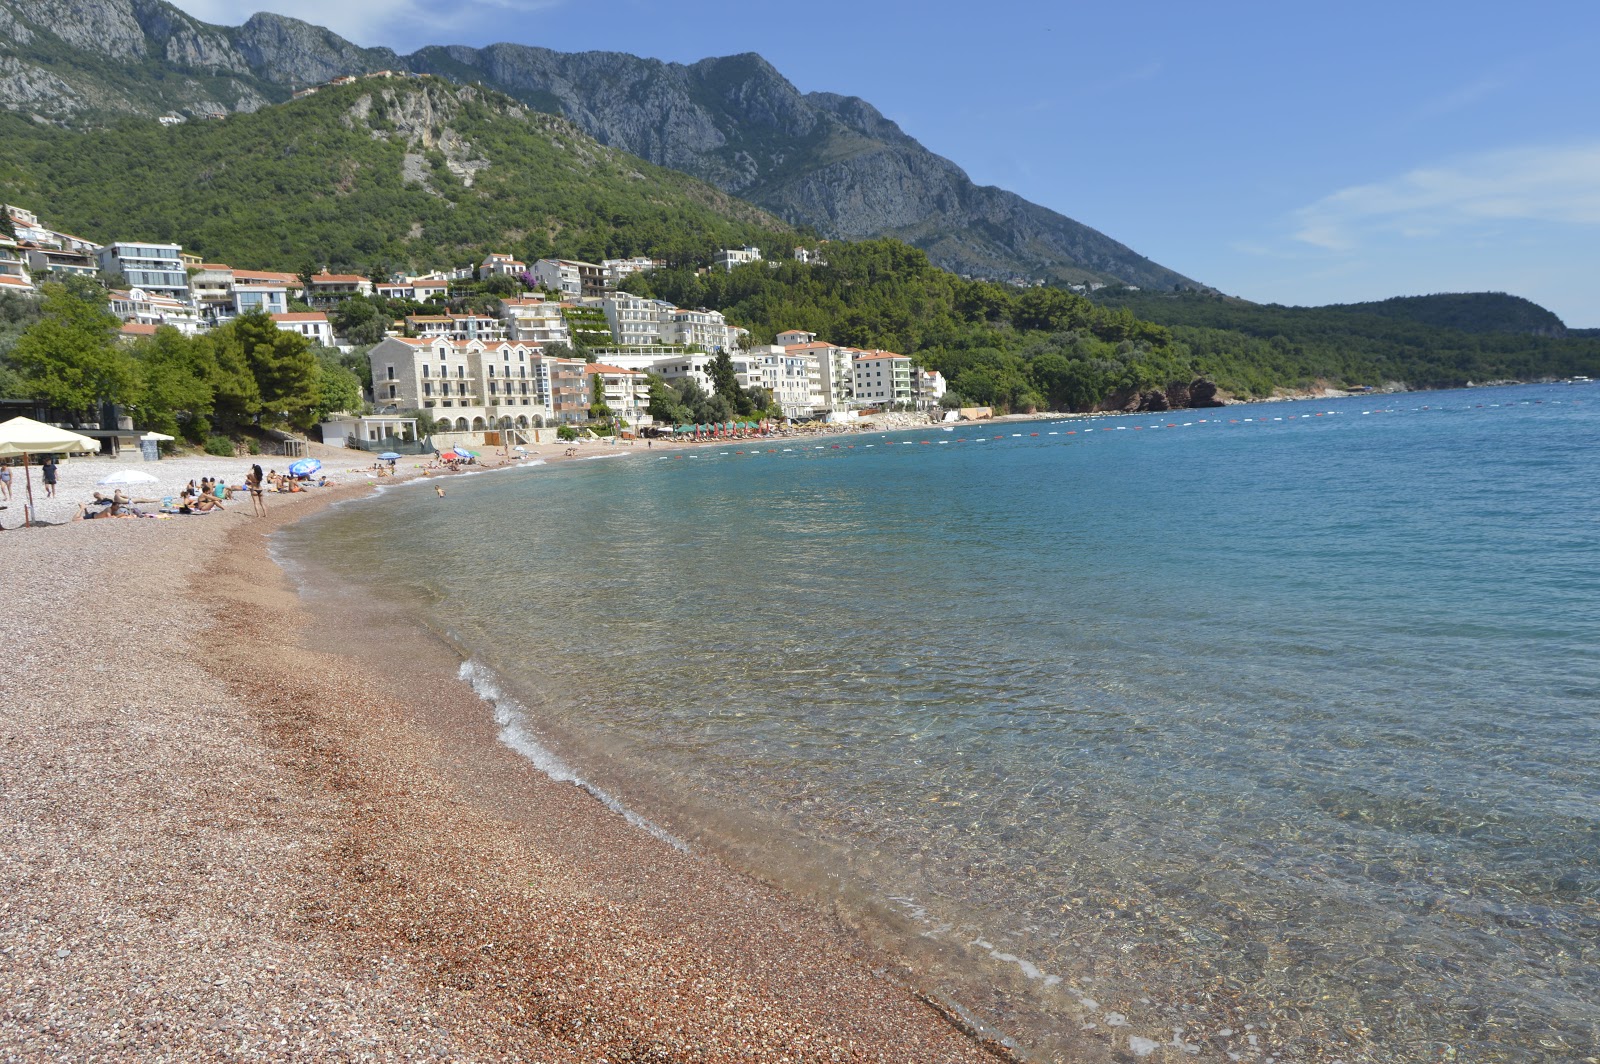 Foto de Sveti Stefan beach - lugar popular entre os apreciadores de relaxamento